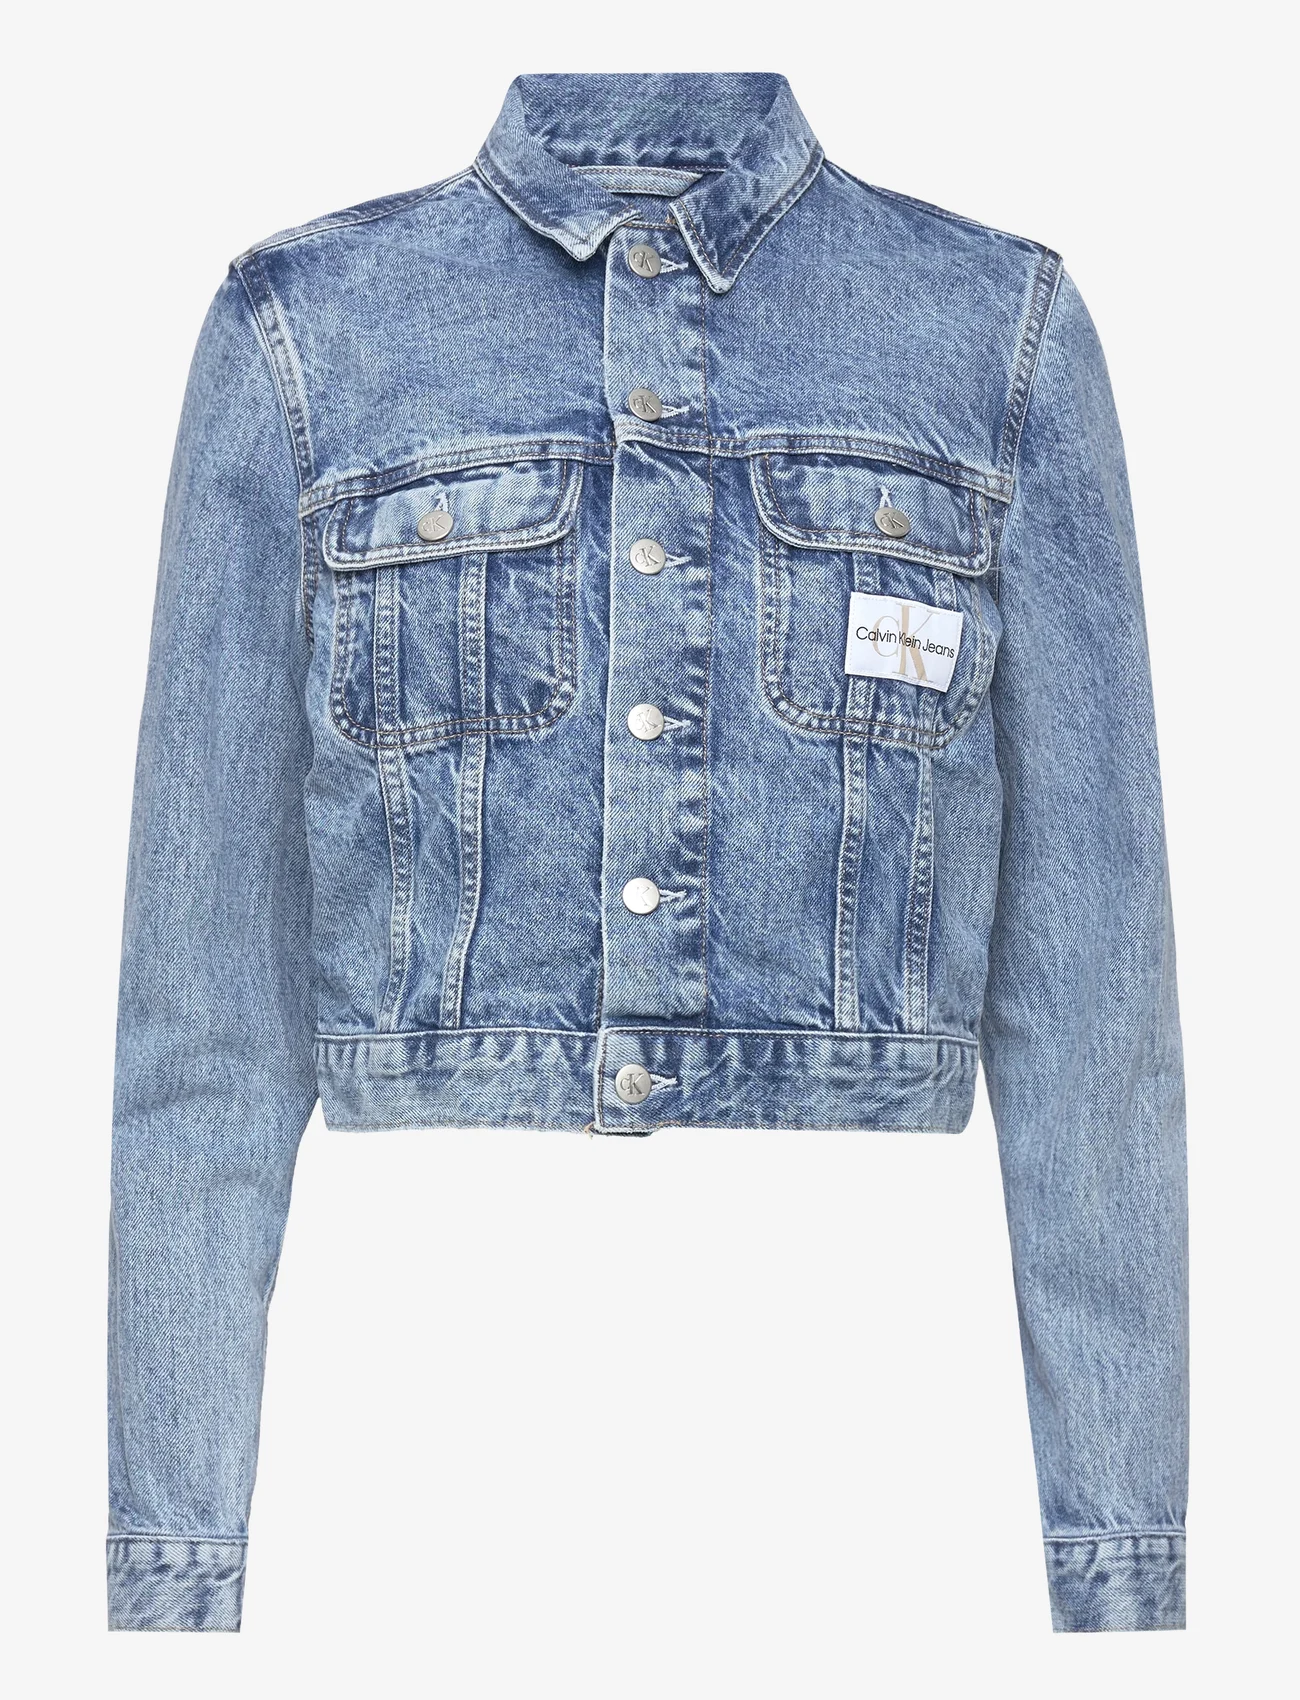 Calvin Klein Jeans Cropped 90s Denim Jacket - 129.90 €. Buy Denim ...